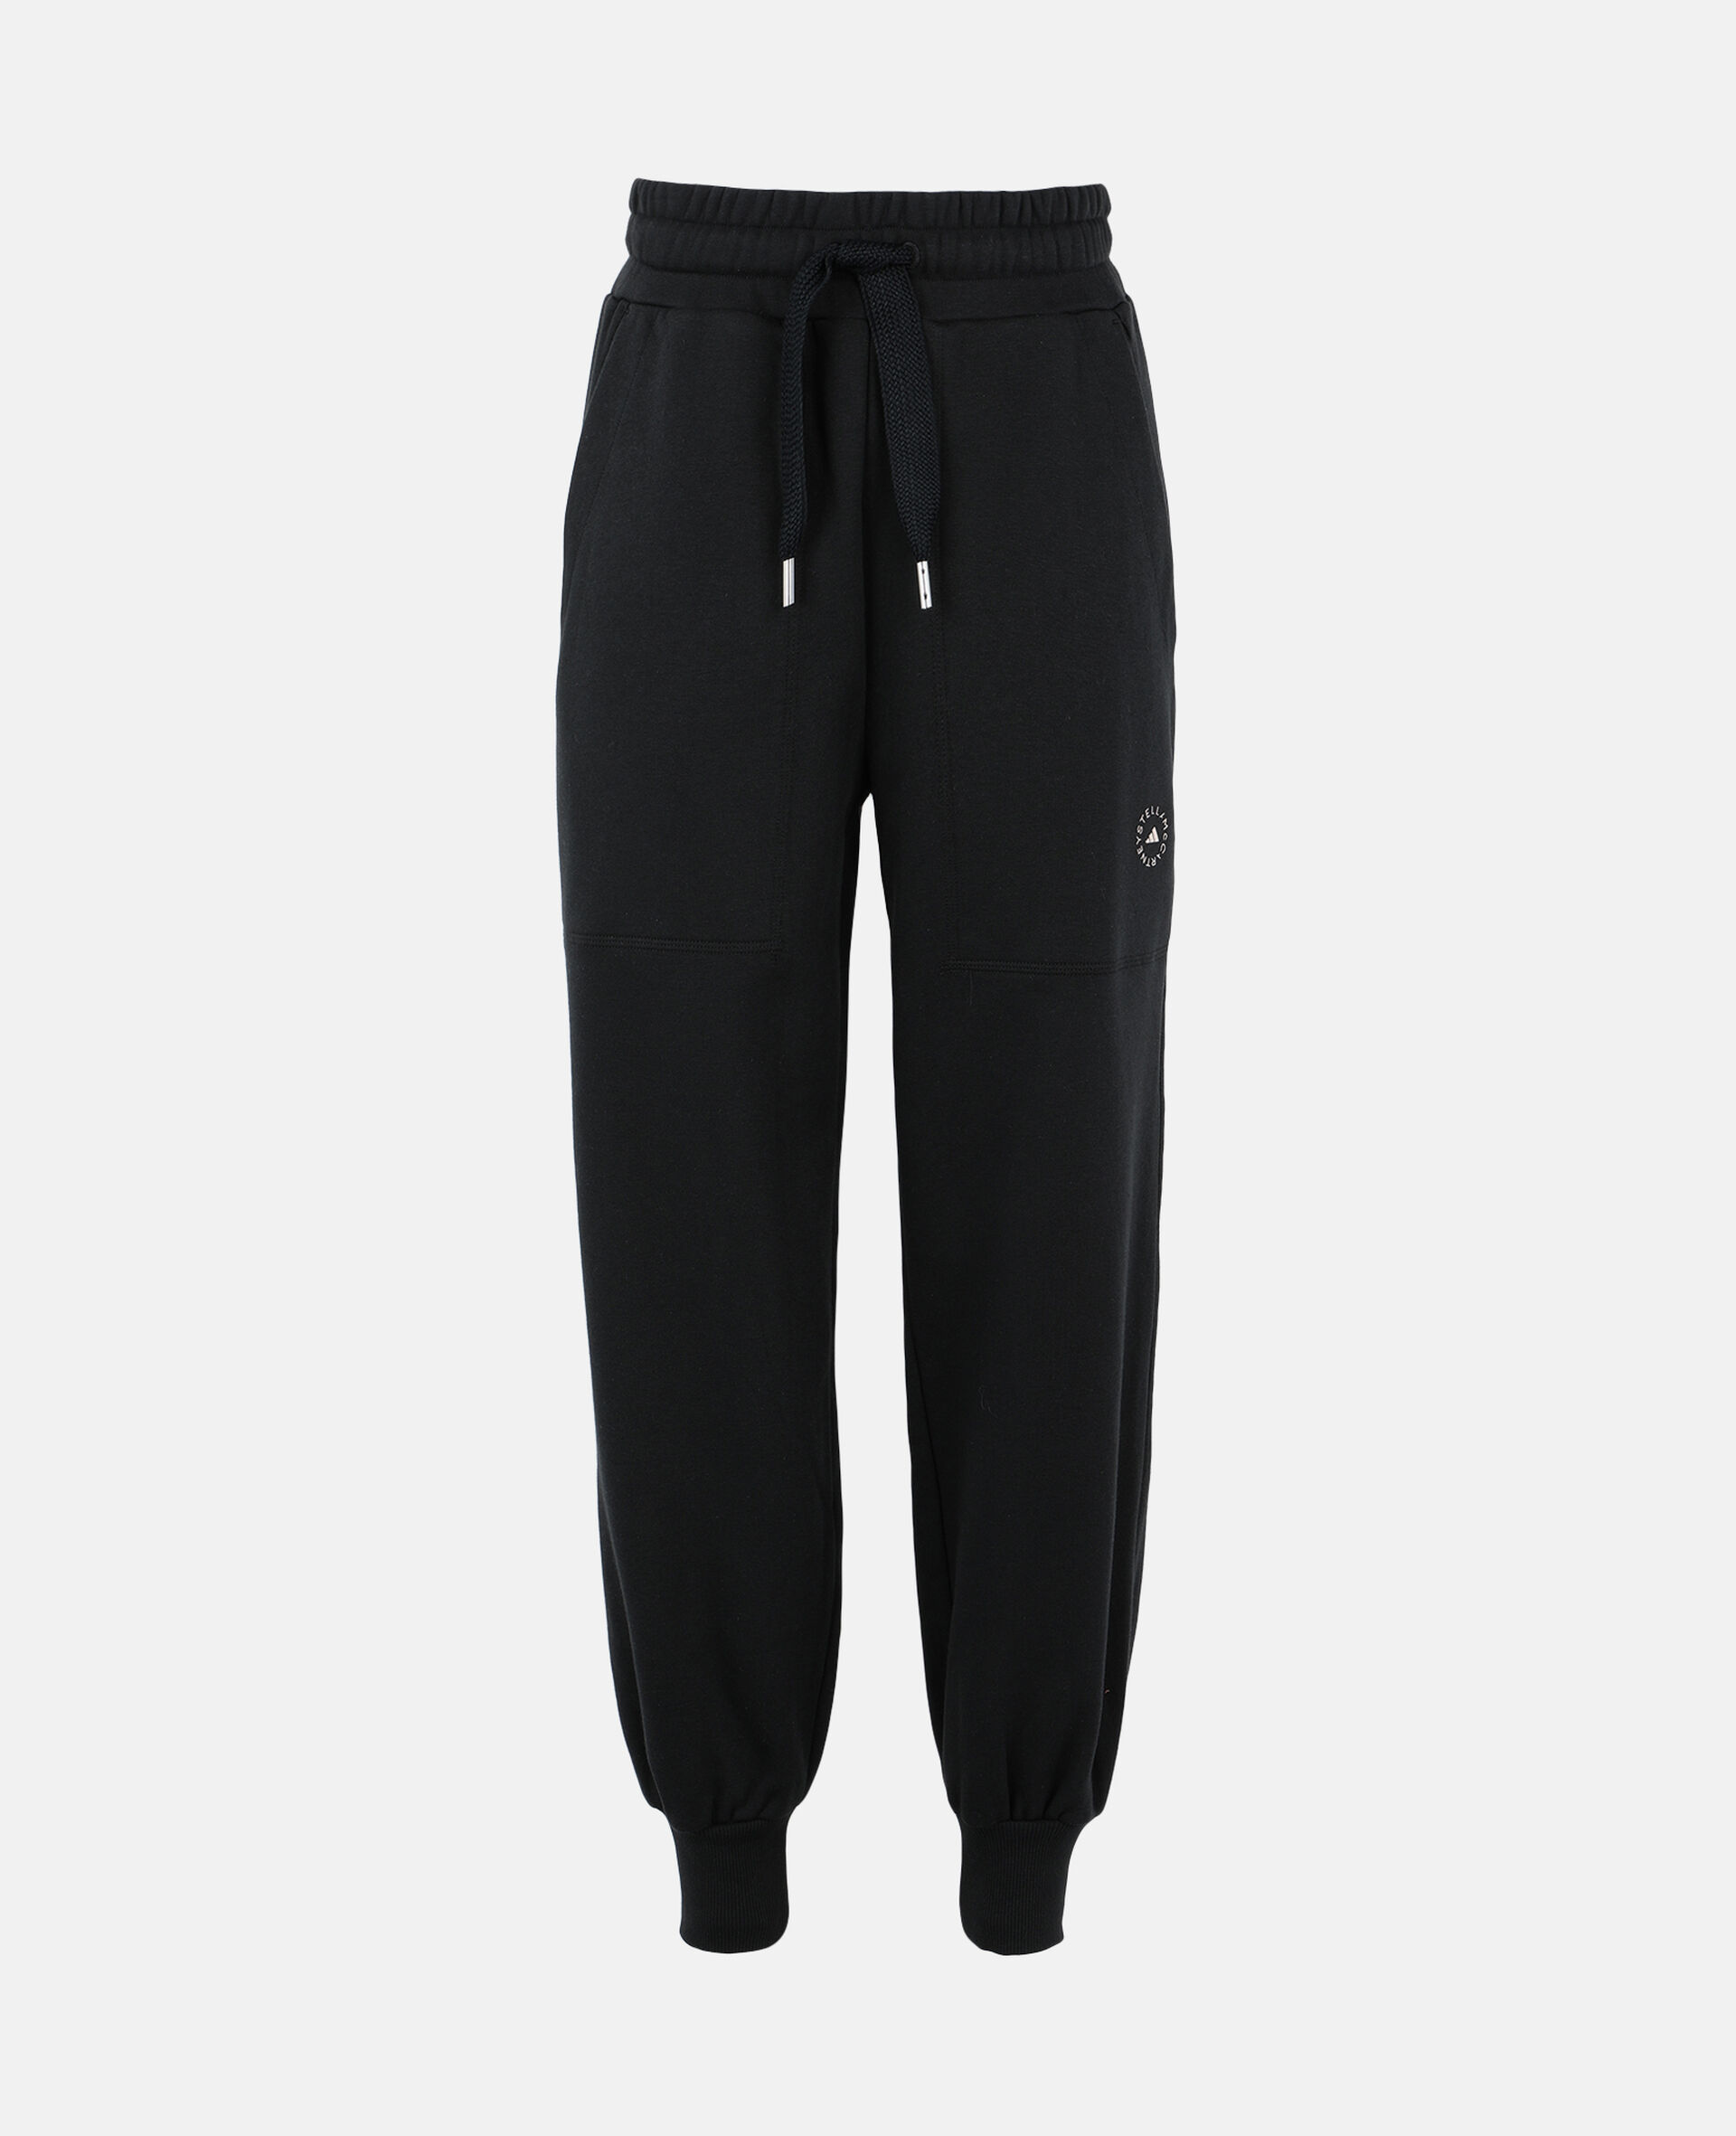 Grey Training Sweatpants-Black-large image number 0